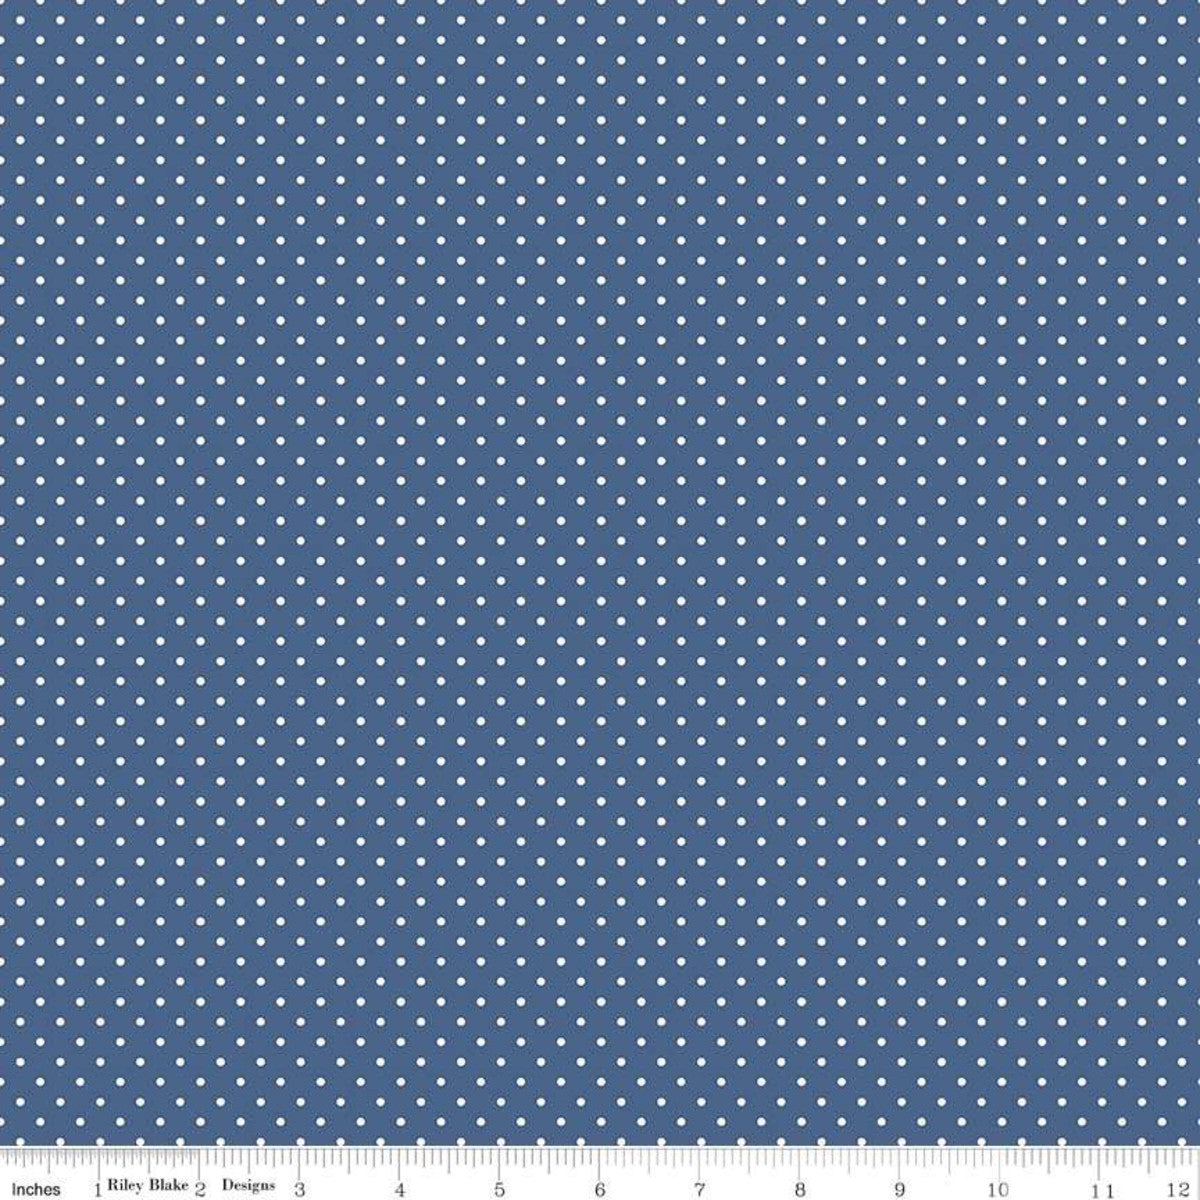 White Swiss (Polka) Dots - Denim Background Fabric, 100% Cotton, Ref. C670-DENIM, Swiss Dots Collection by Riley Blake Designs®